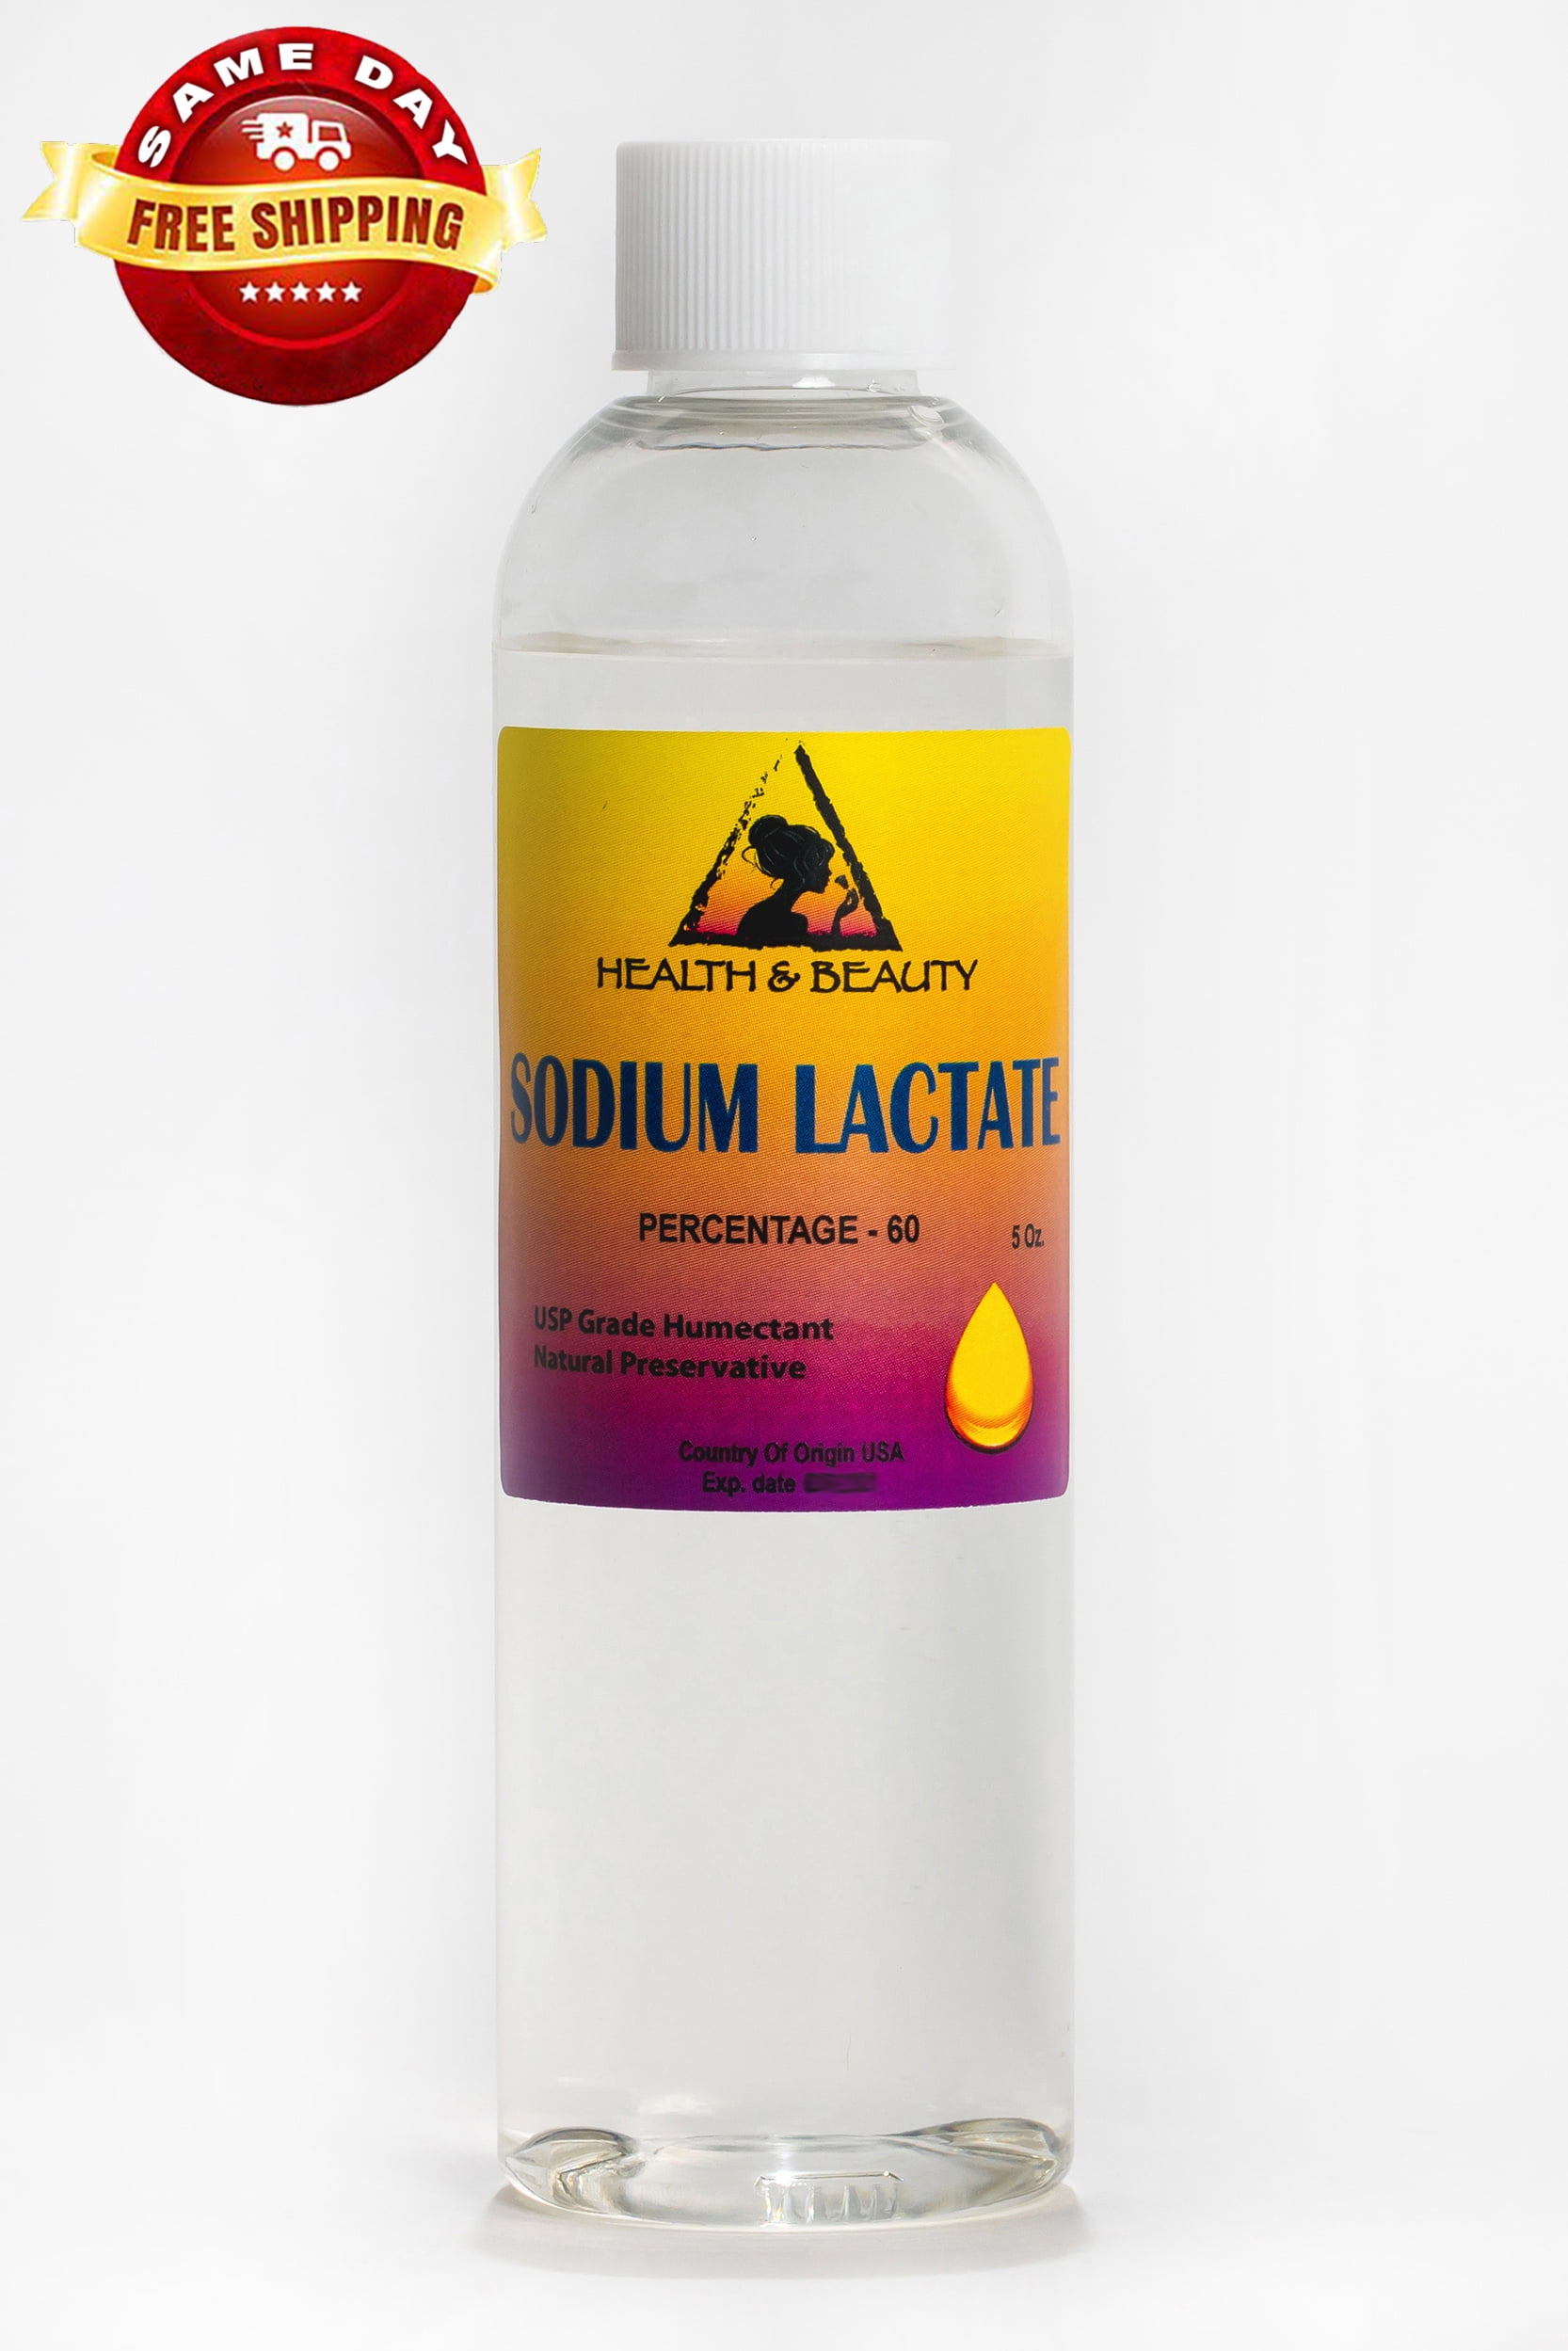 Sodium lactate 60% natural usp preservative liquid humectant 100% pure 5 oz  